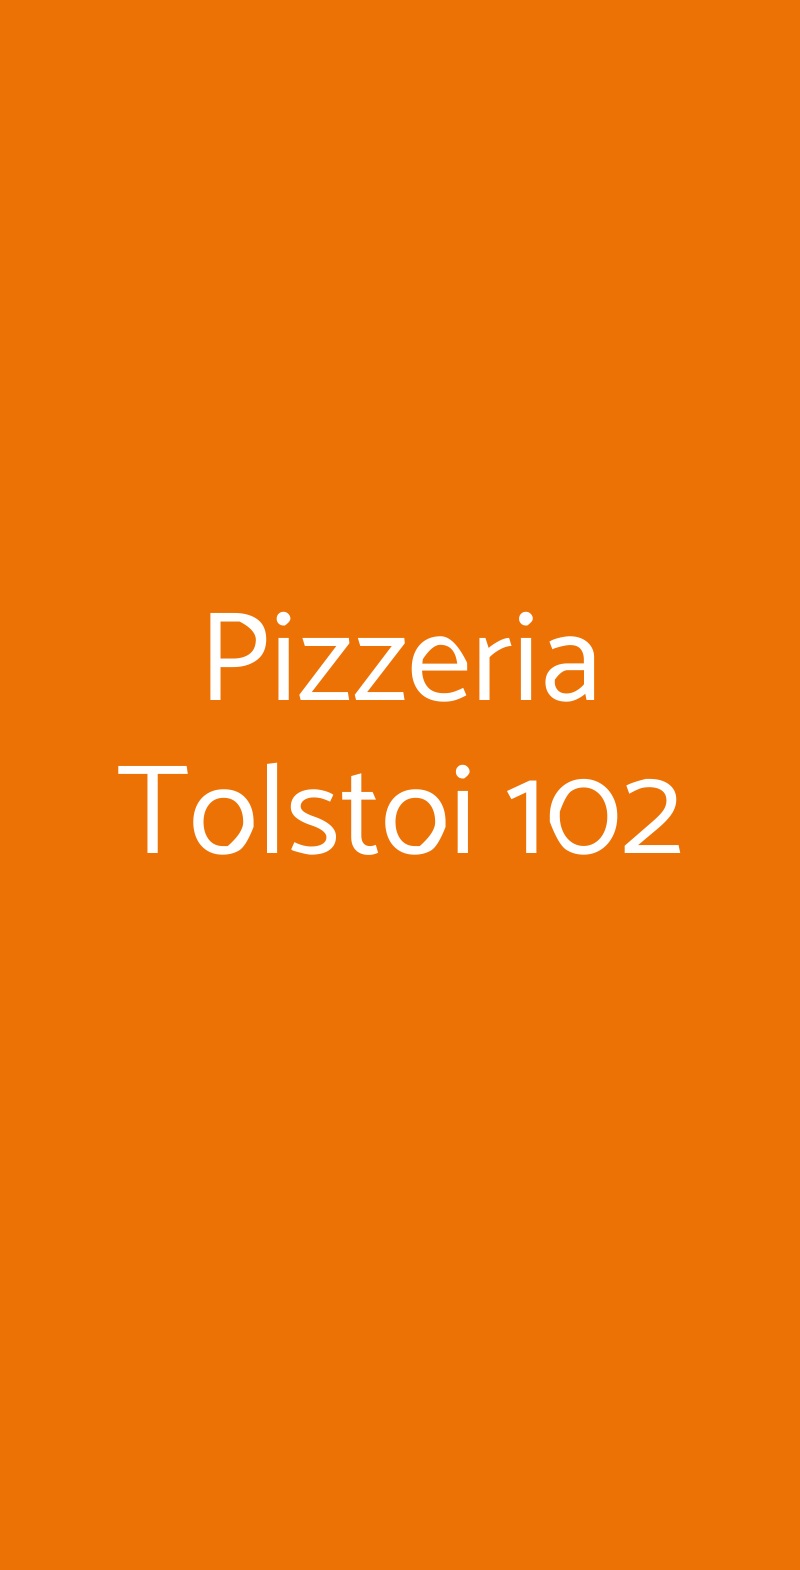 Pizzeria Tolstoi 102 Milano menù 1 pagina